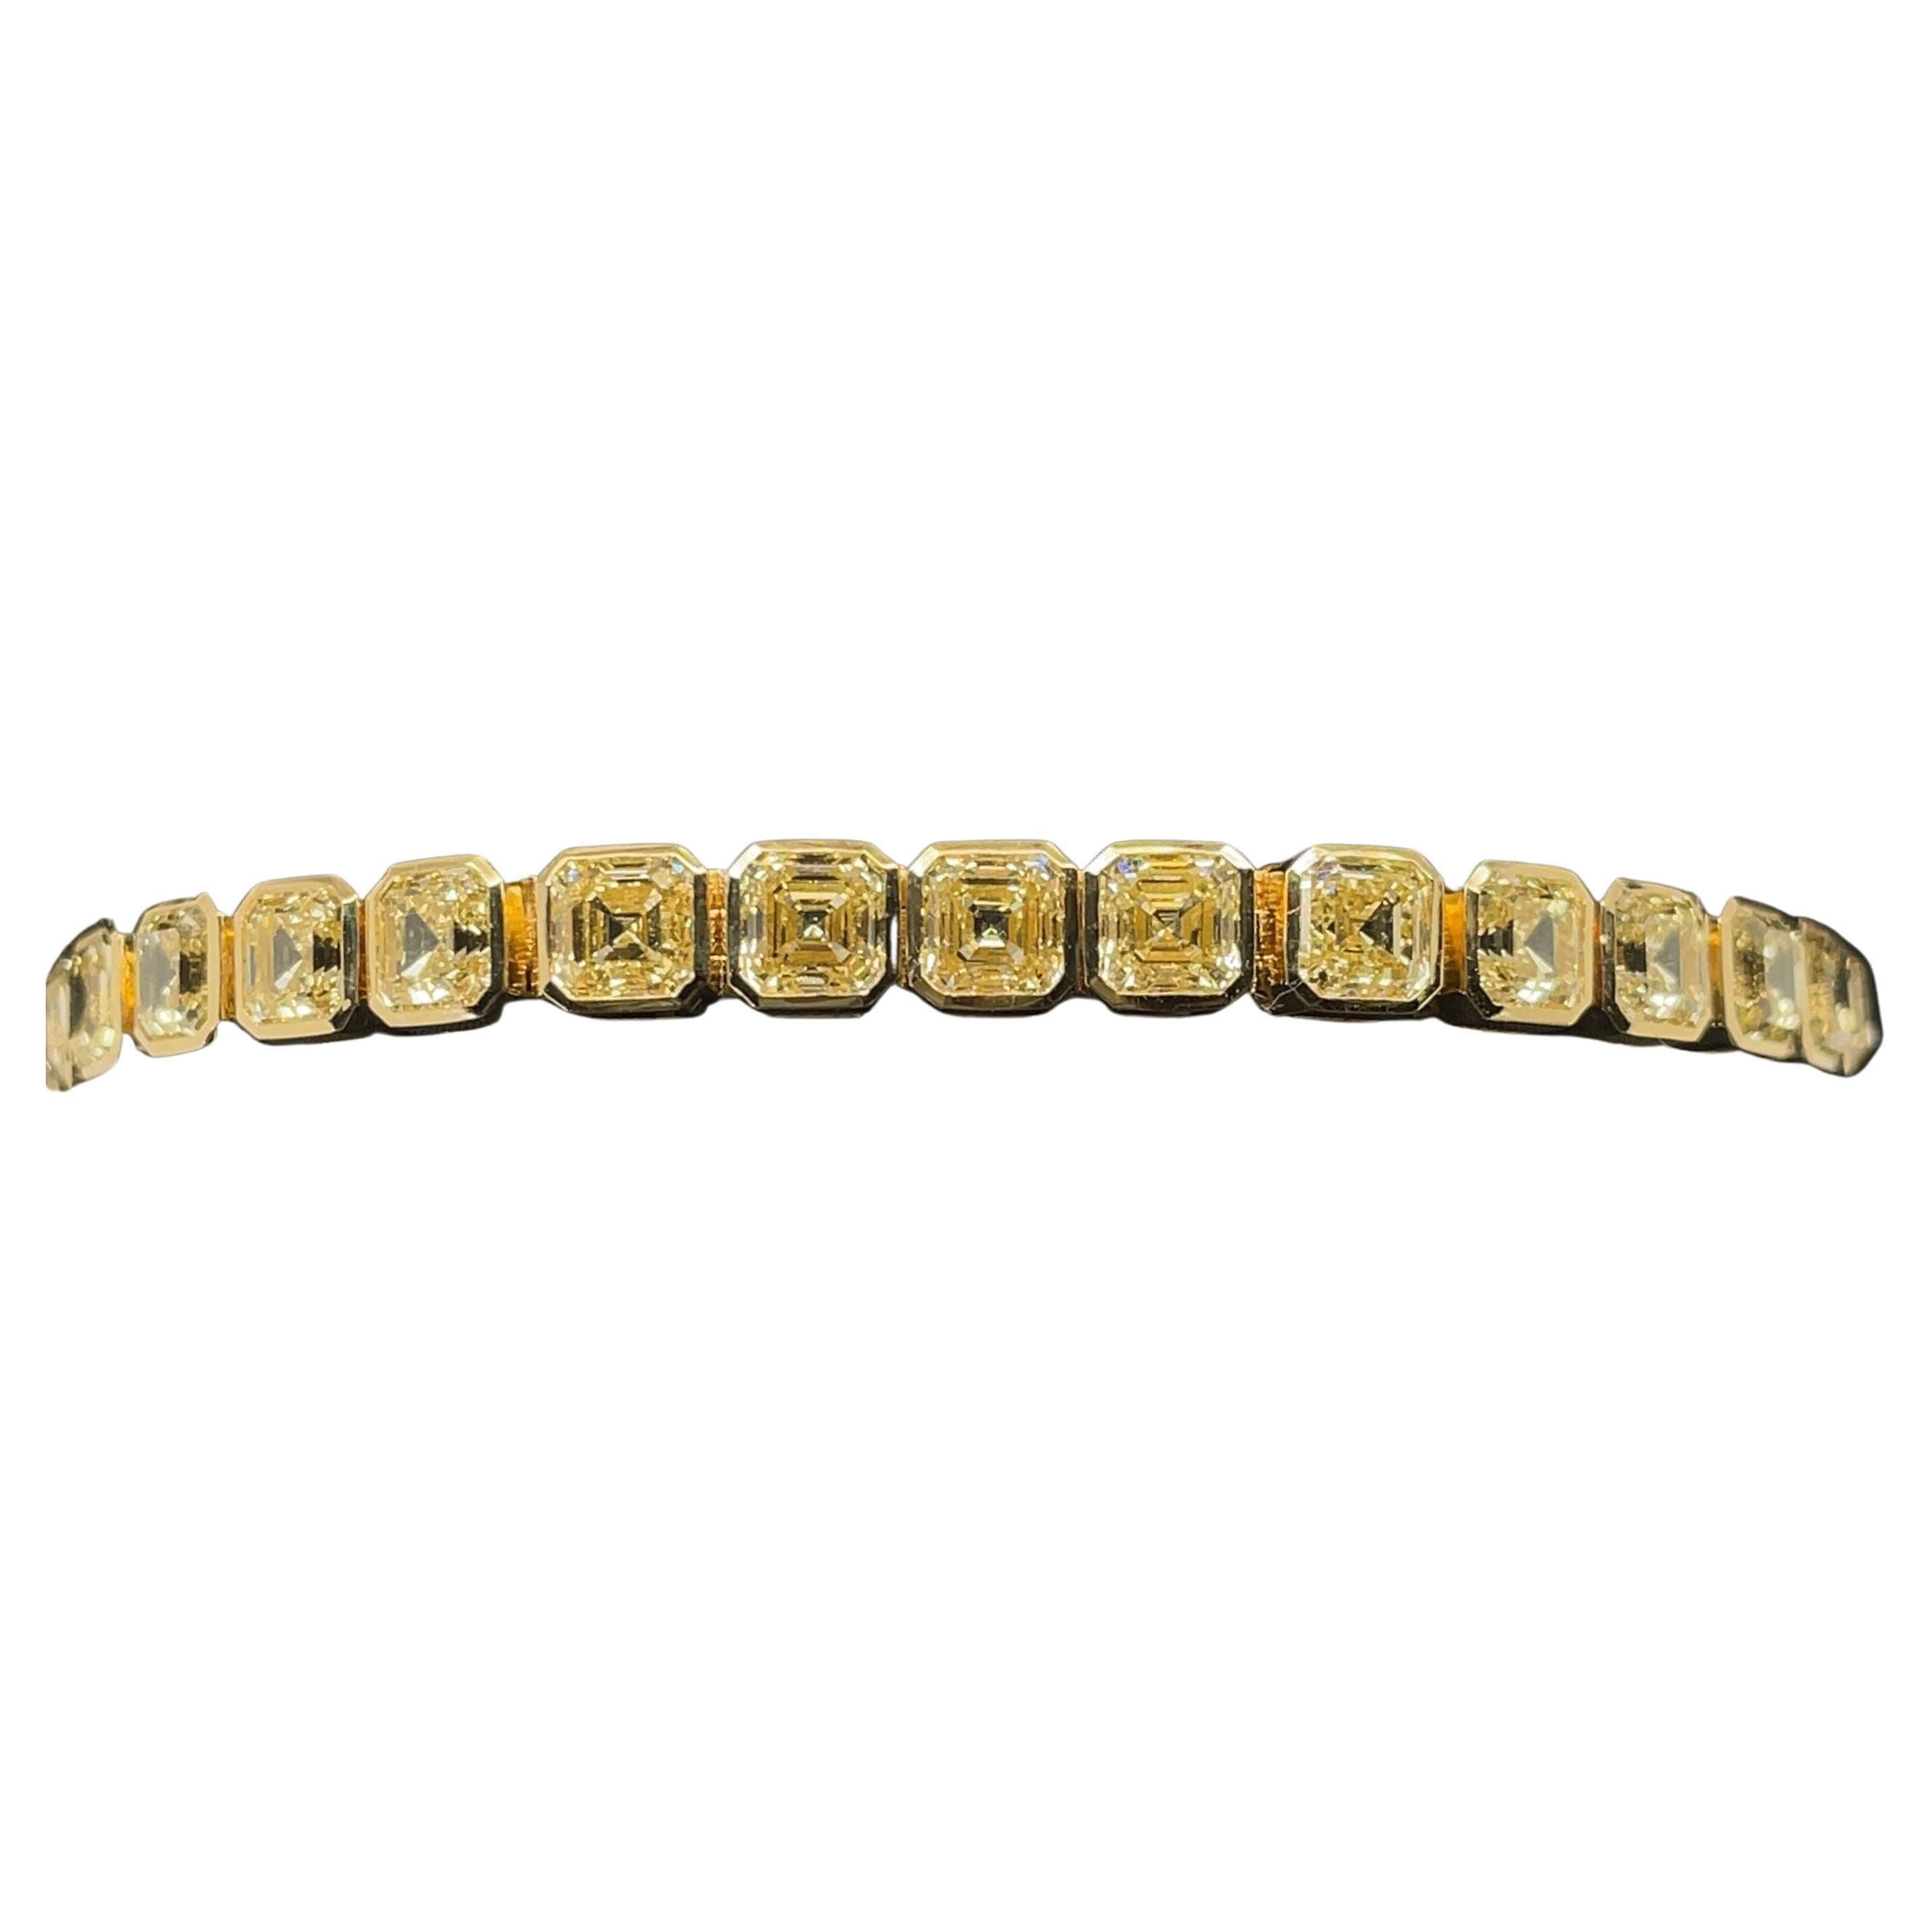 19.56cttw Asscher Cut Fancy Yellow Diamond Bracelet Set in 18KYG For Sale